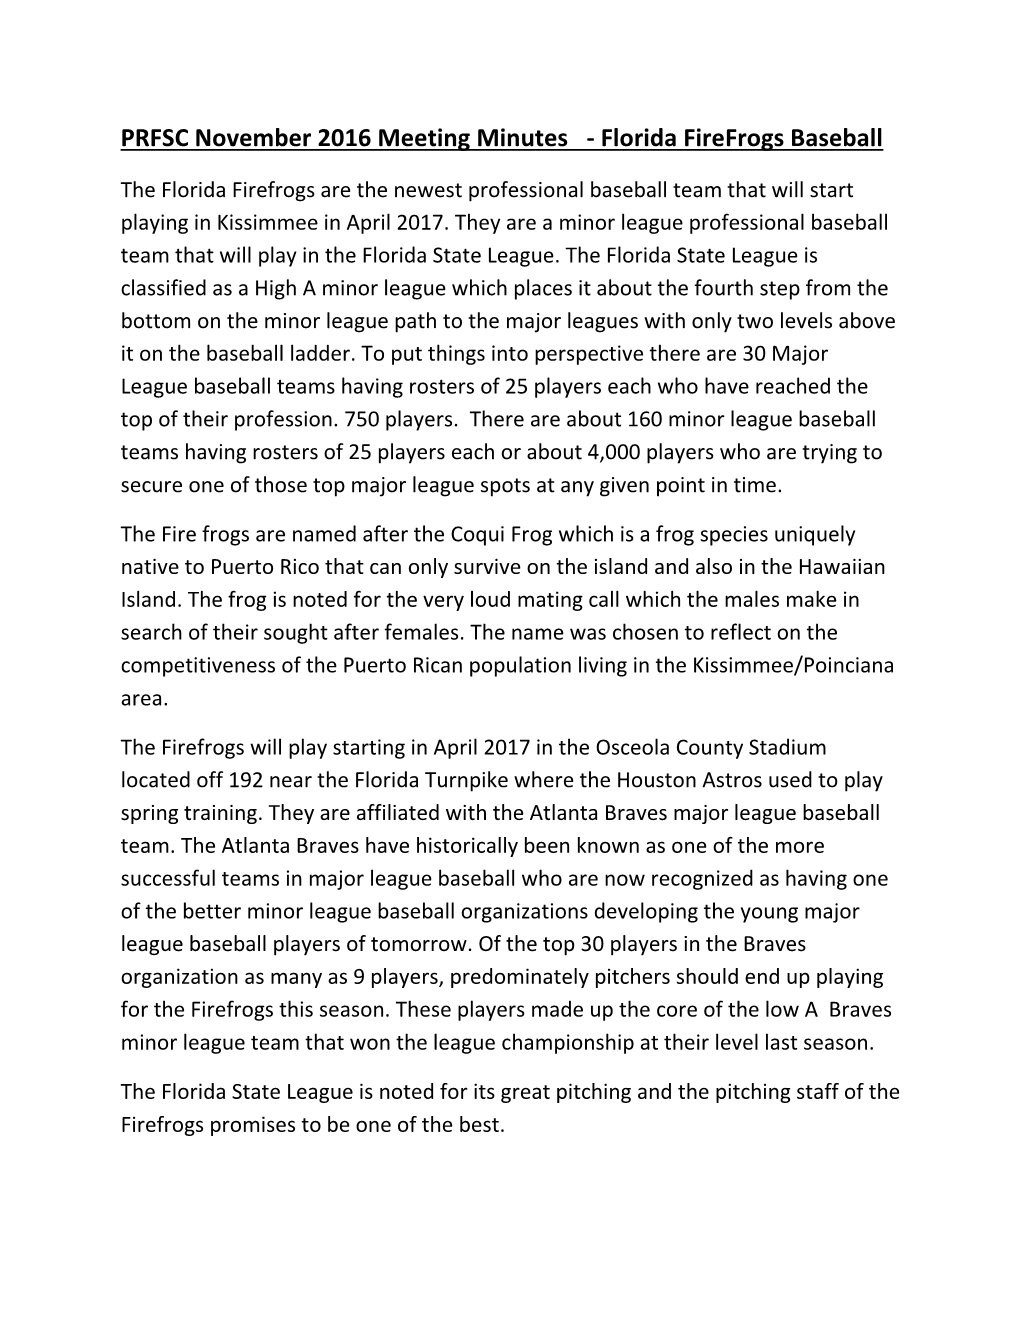 PRFSC November 2016 Meeting Minutes - Florida Firefrogs Baseball